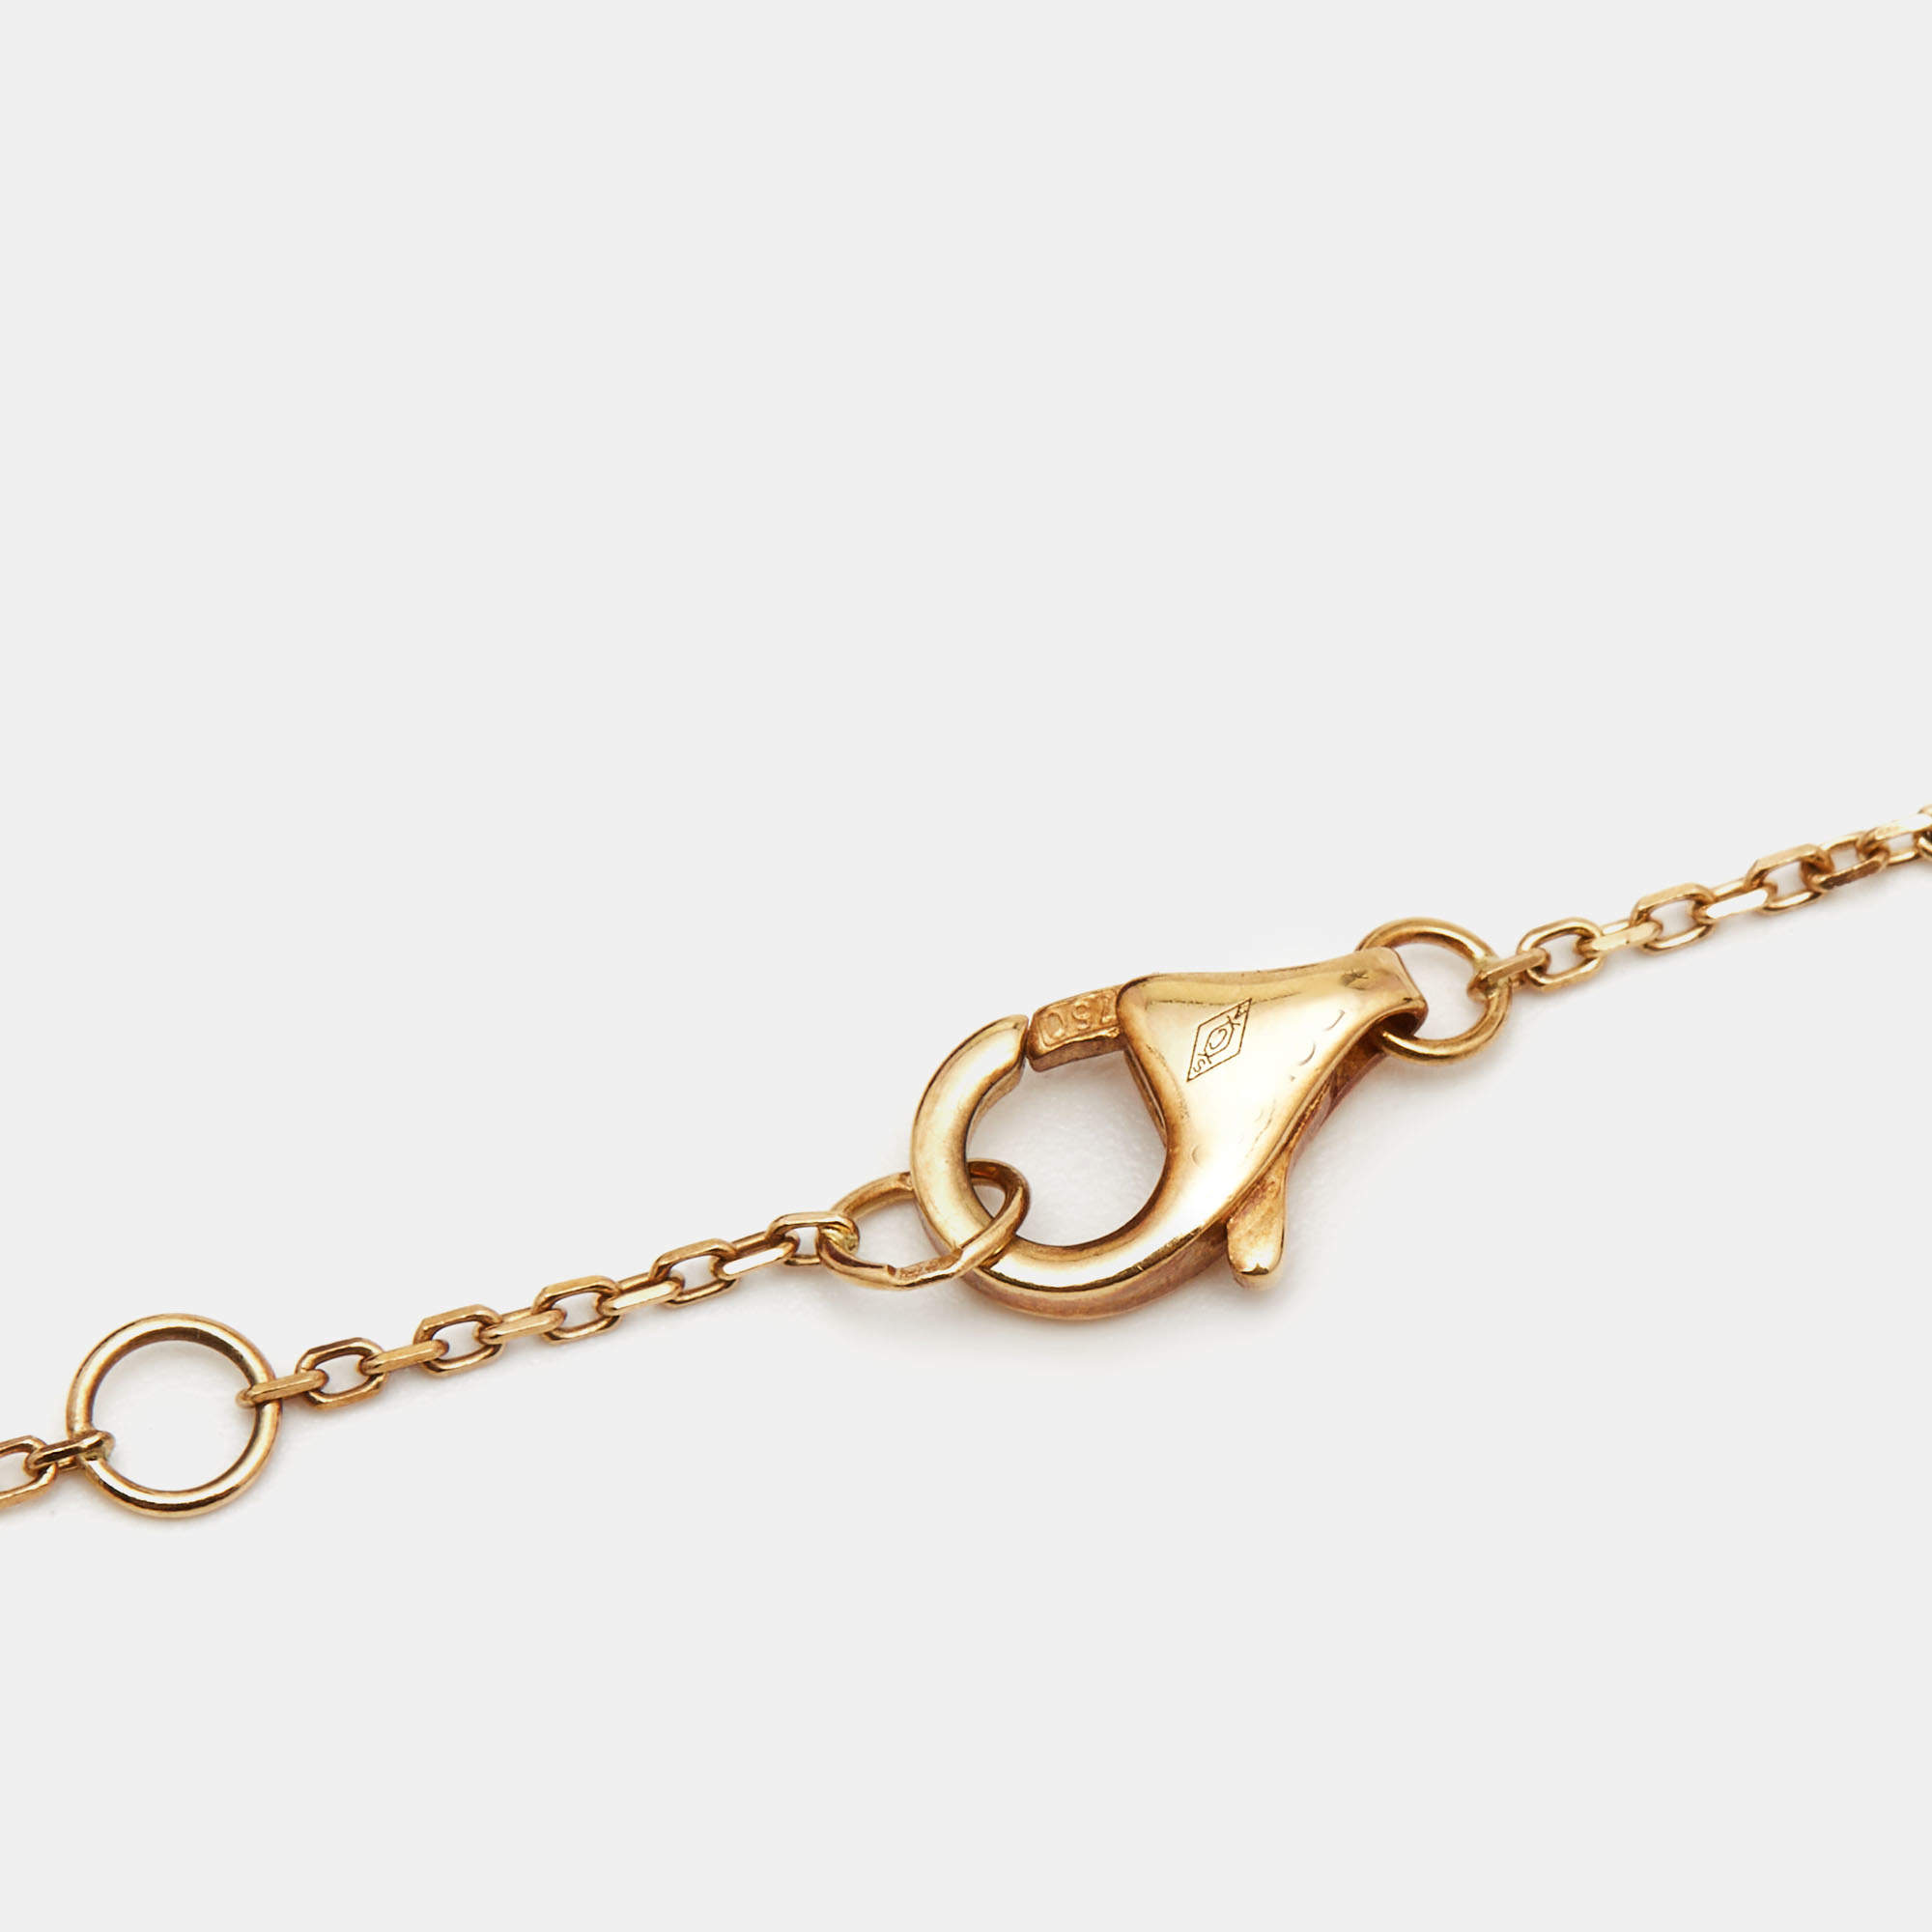 CRB6044017 - Amulette de Cartier bracelet, XS model - Yellow gold, diamond,  white mother-of-pearl - Cartier